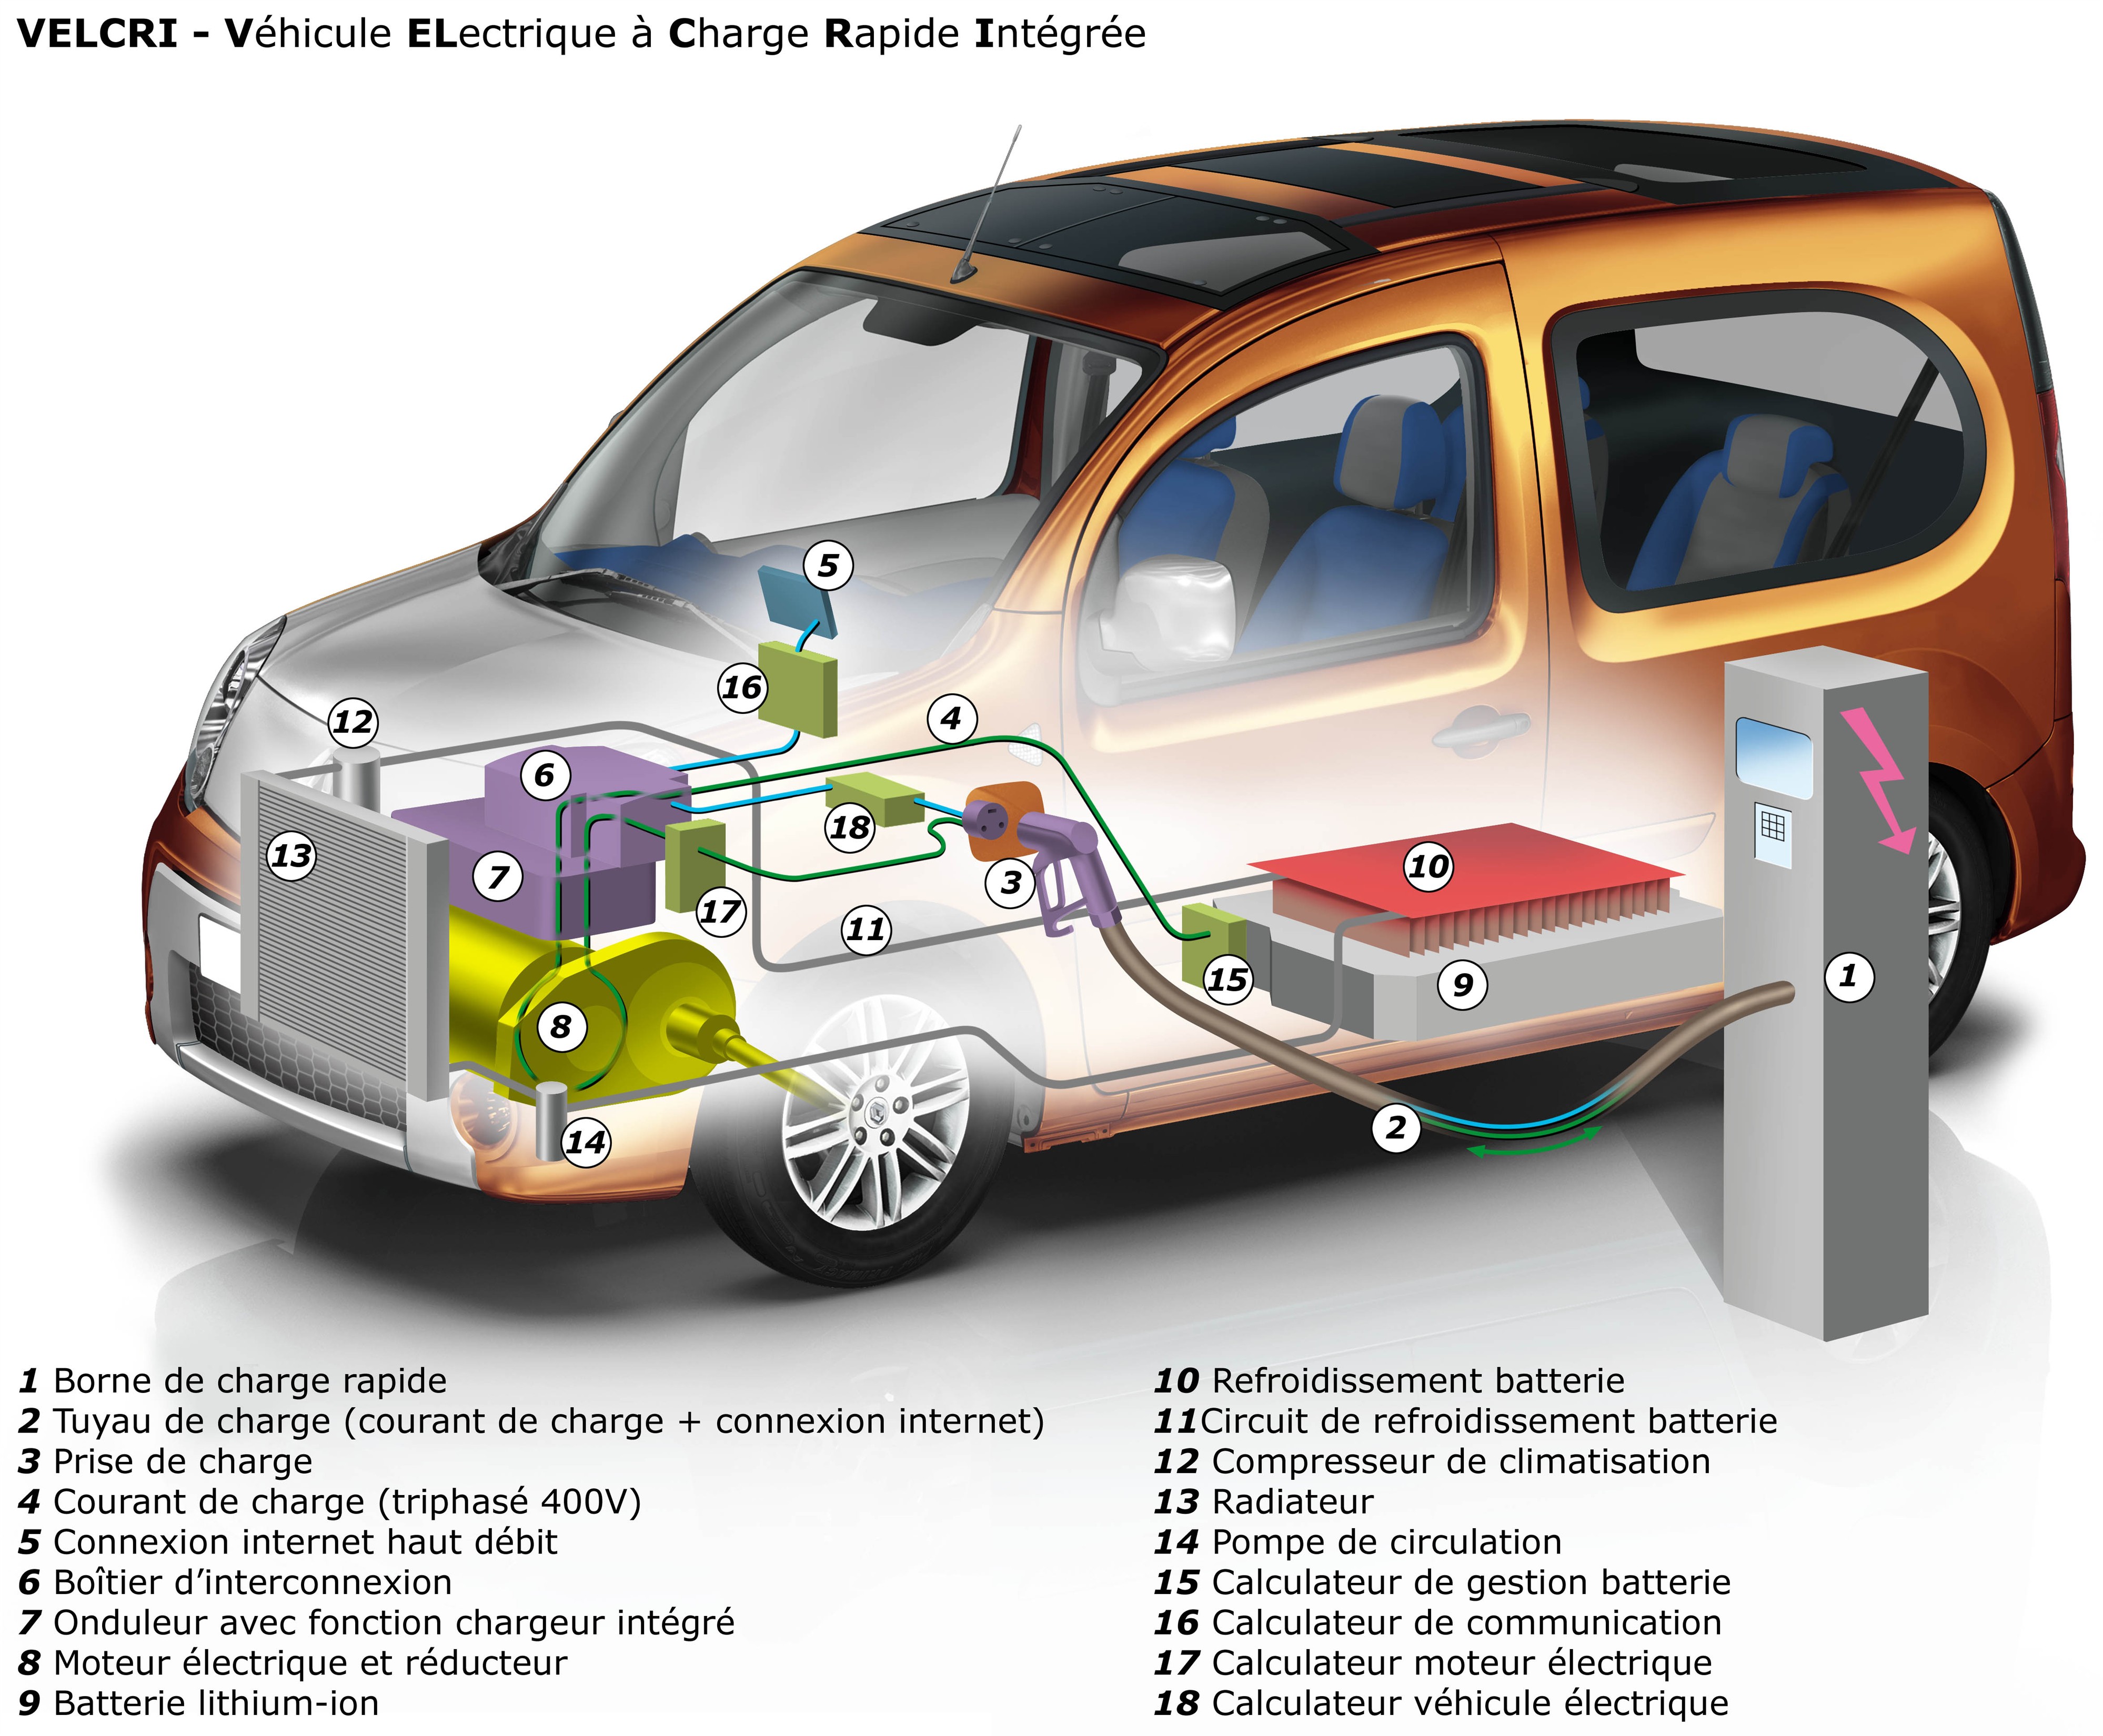 http://www.voiture-electrique-populaire.fr/wp-content/uploads/2012/09/velcri-charge-ultra-rapide-voiture-electrique1.jpg